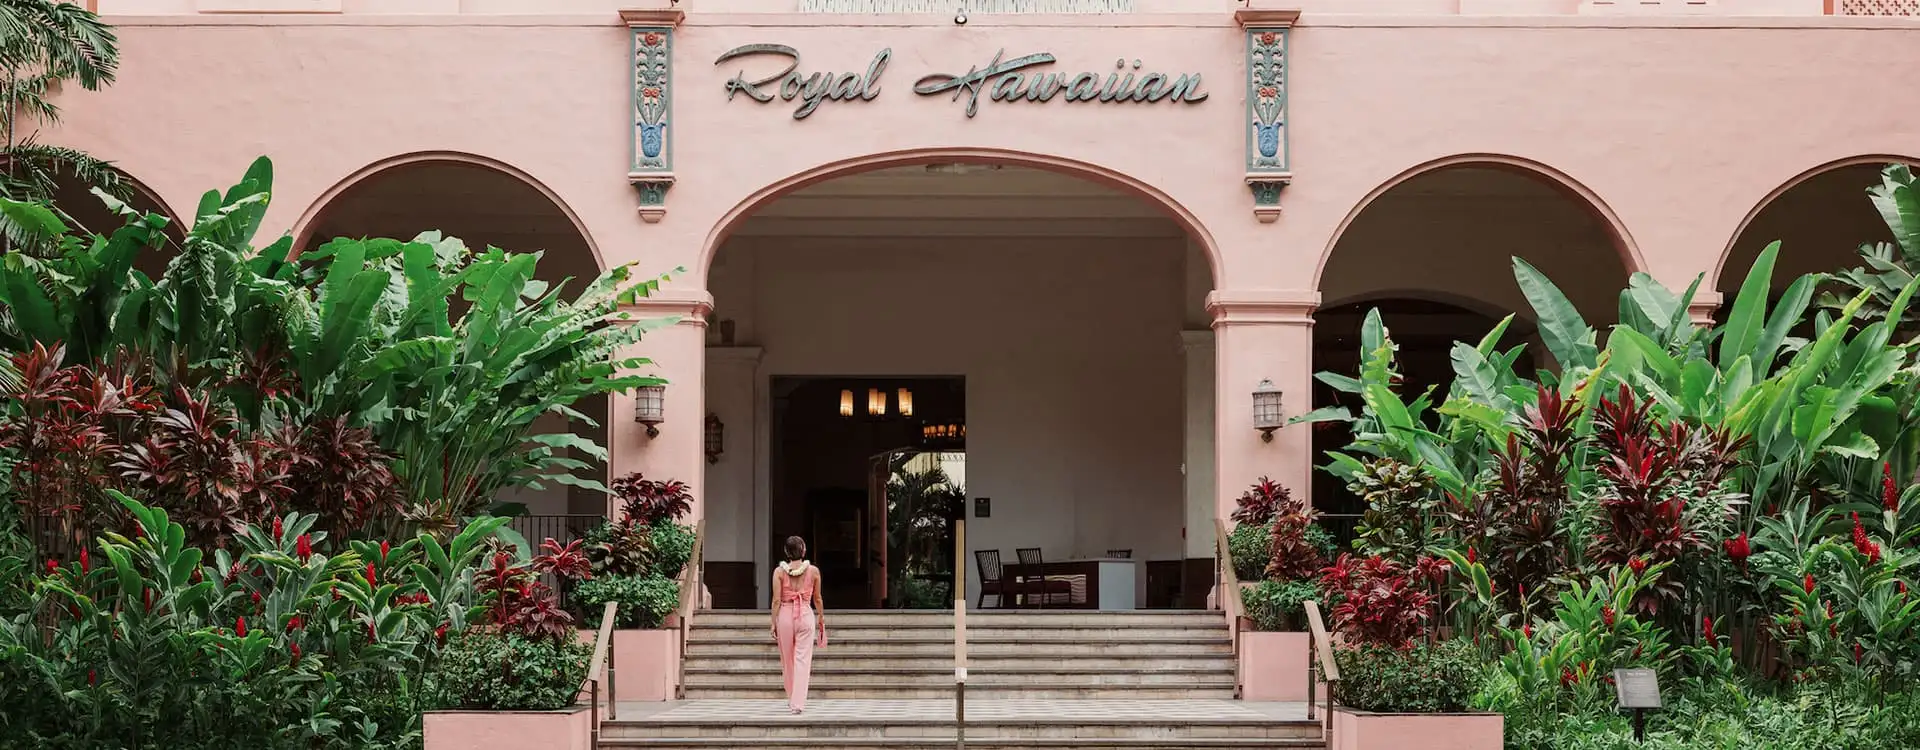 Directions to the Royal Hawaiian Waikiki Resort